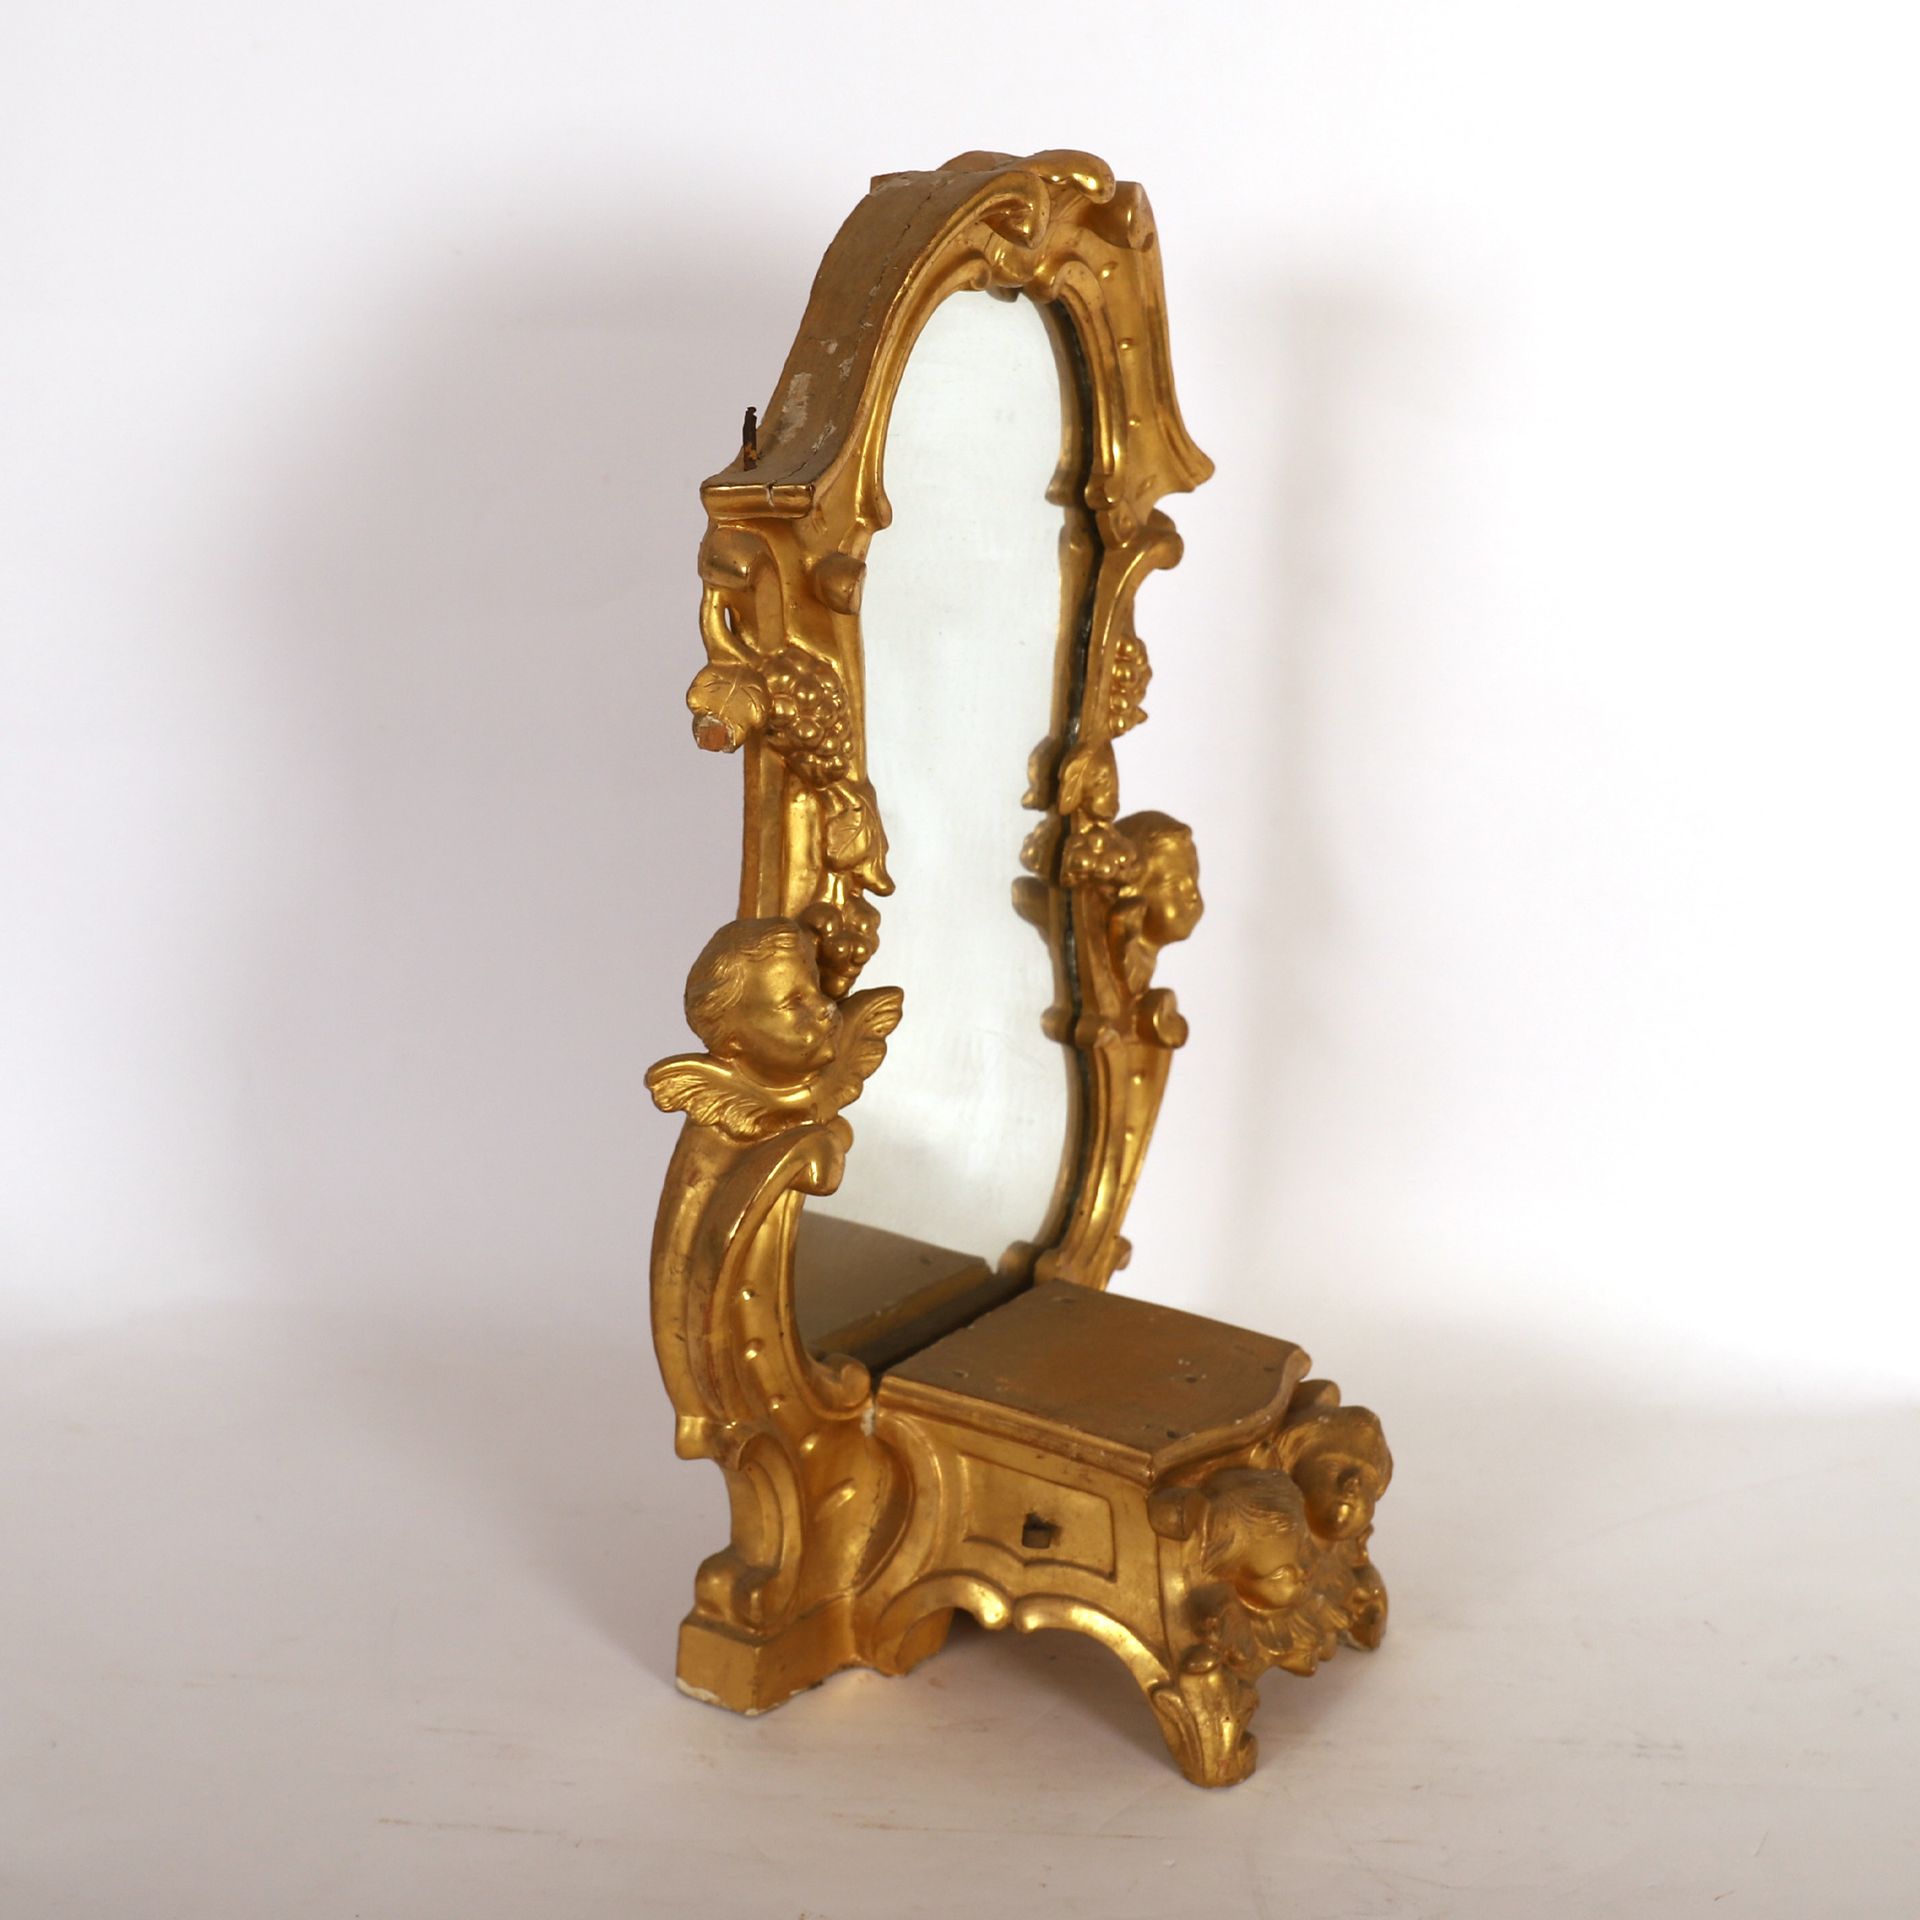 Null 雕刻和镀金的木制镜子展示架路易十四模式

饰有普提头和成束的水果

61 x 36,5 x 21,5 cm

使用和维护的条件